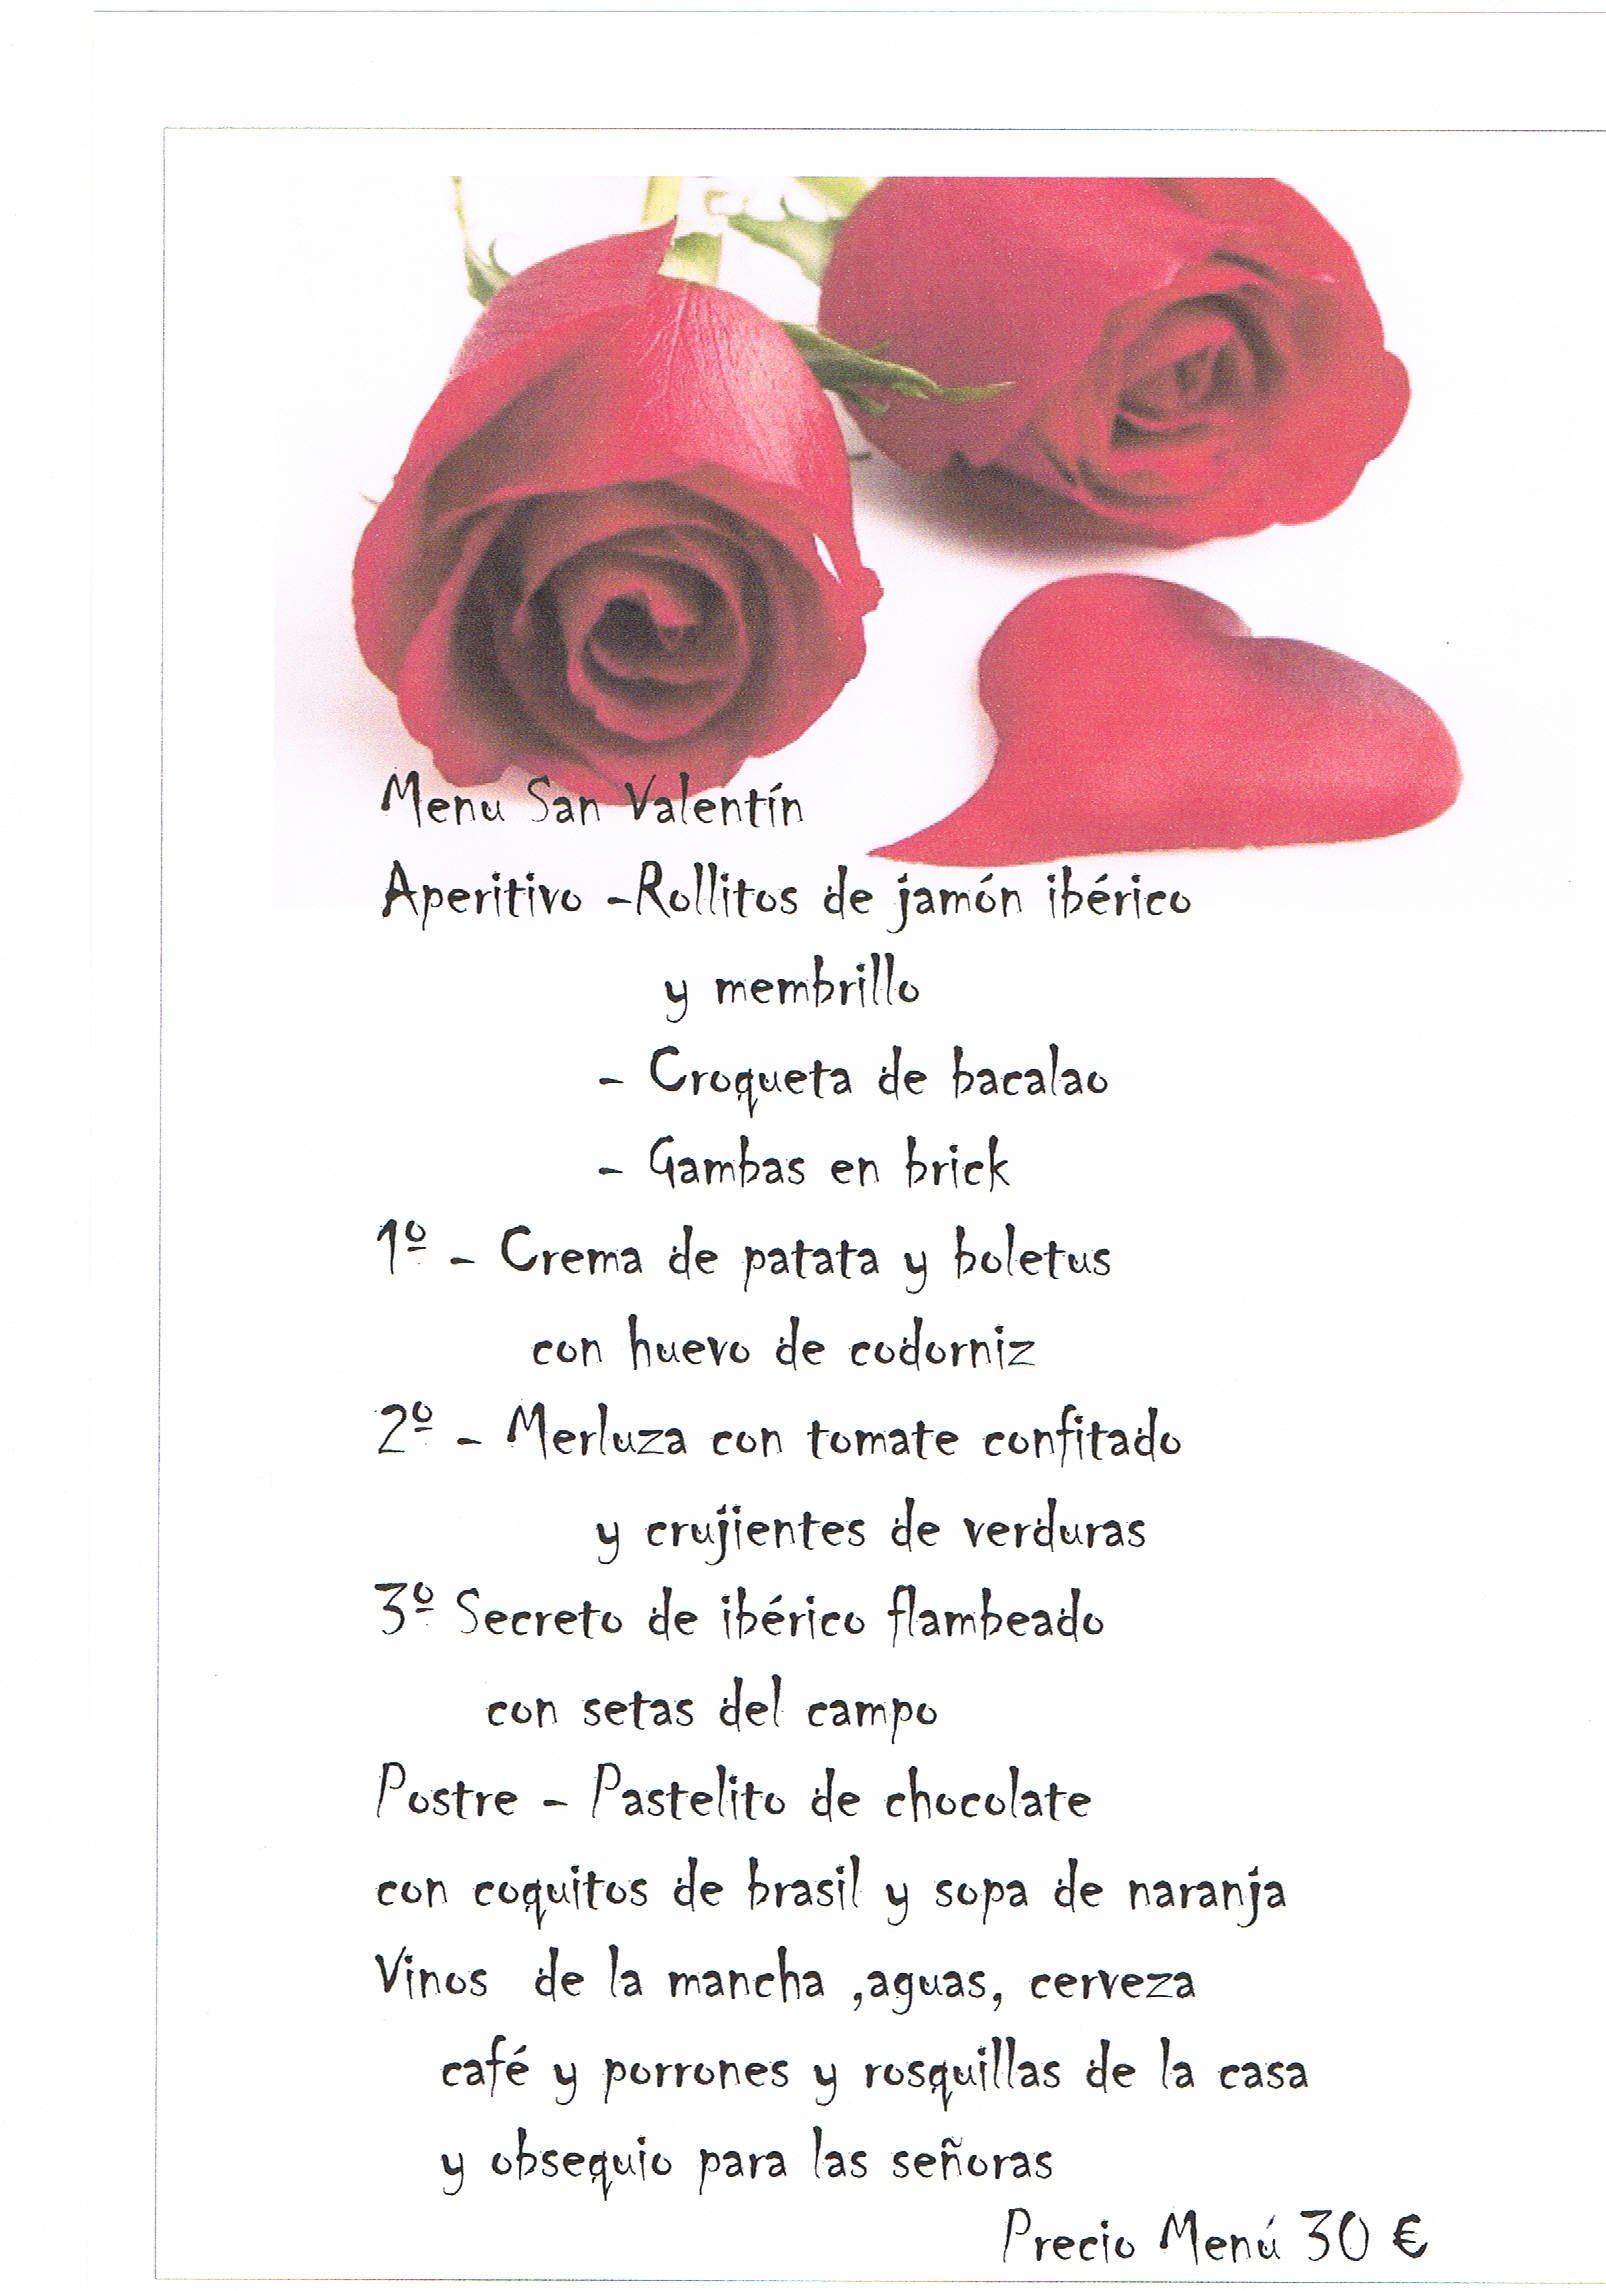 Menú San Valentín 2014